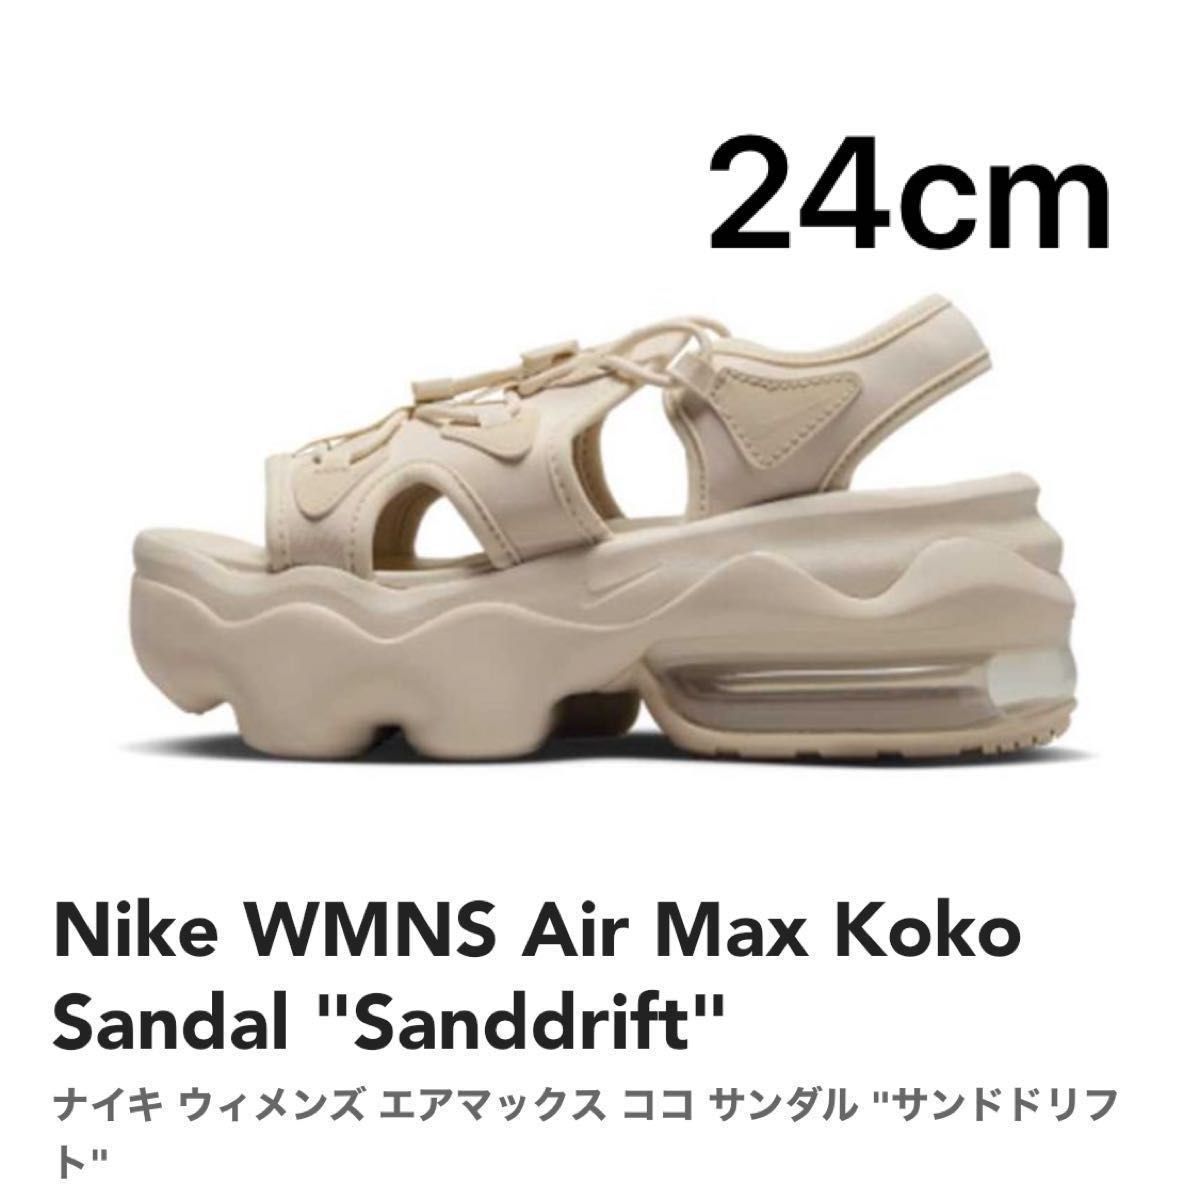 Fル NIKE ナイキ ココサンダル サンドドリフト koko sandal 23cm